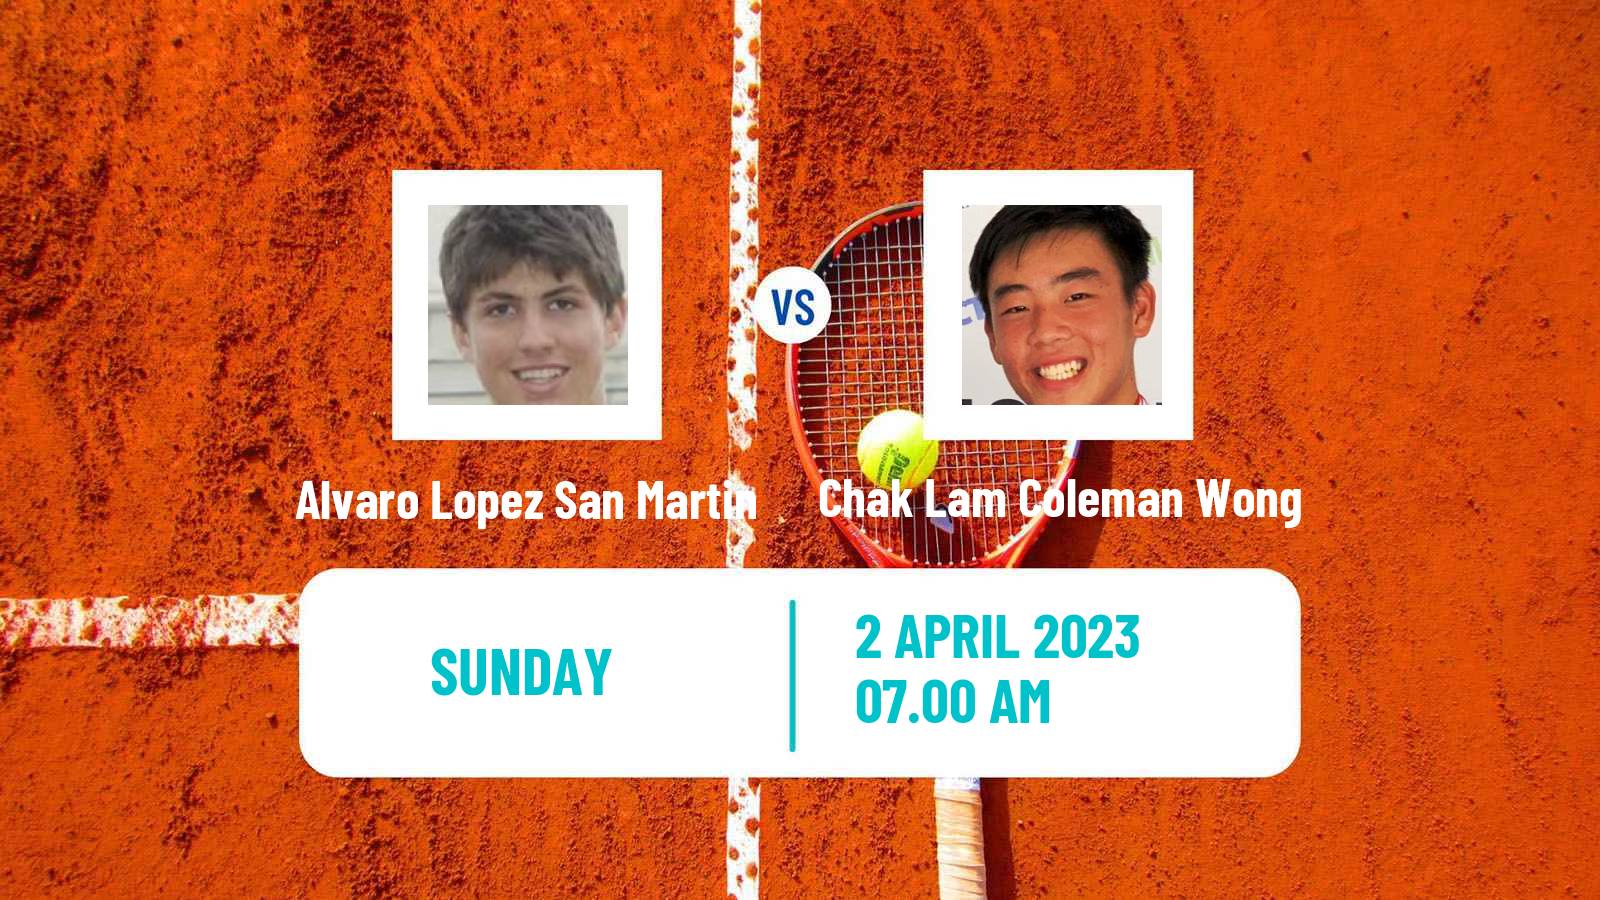 Tennis ATP Challenger Alvaro Lopez San Martin - Chak Lam Coleman Wong